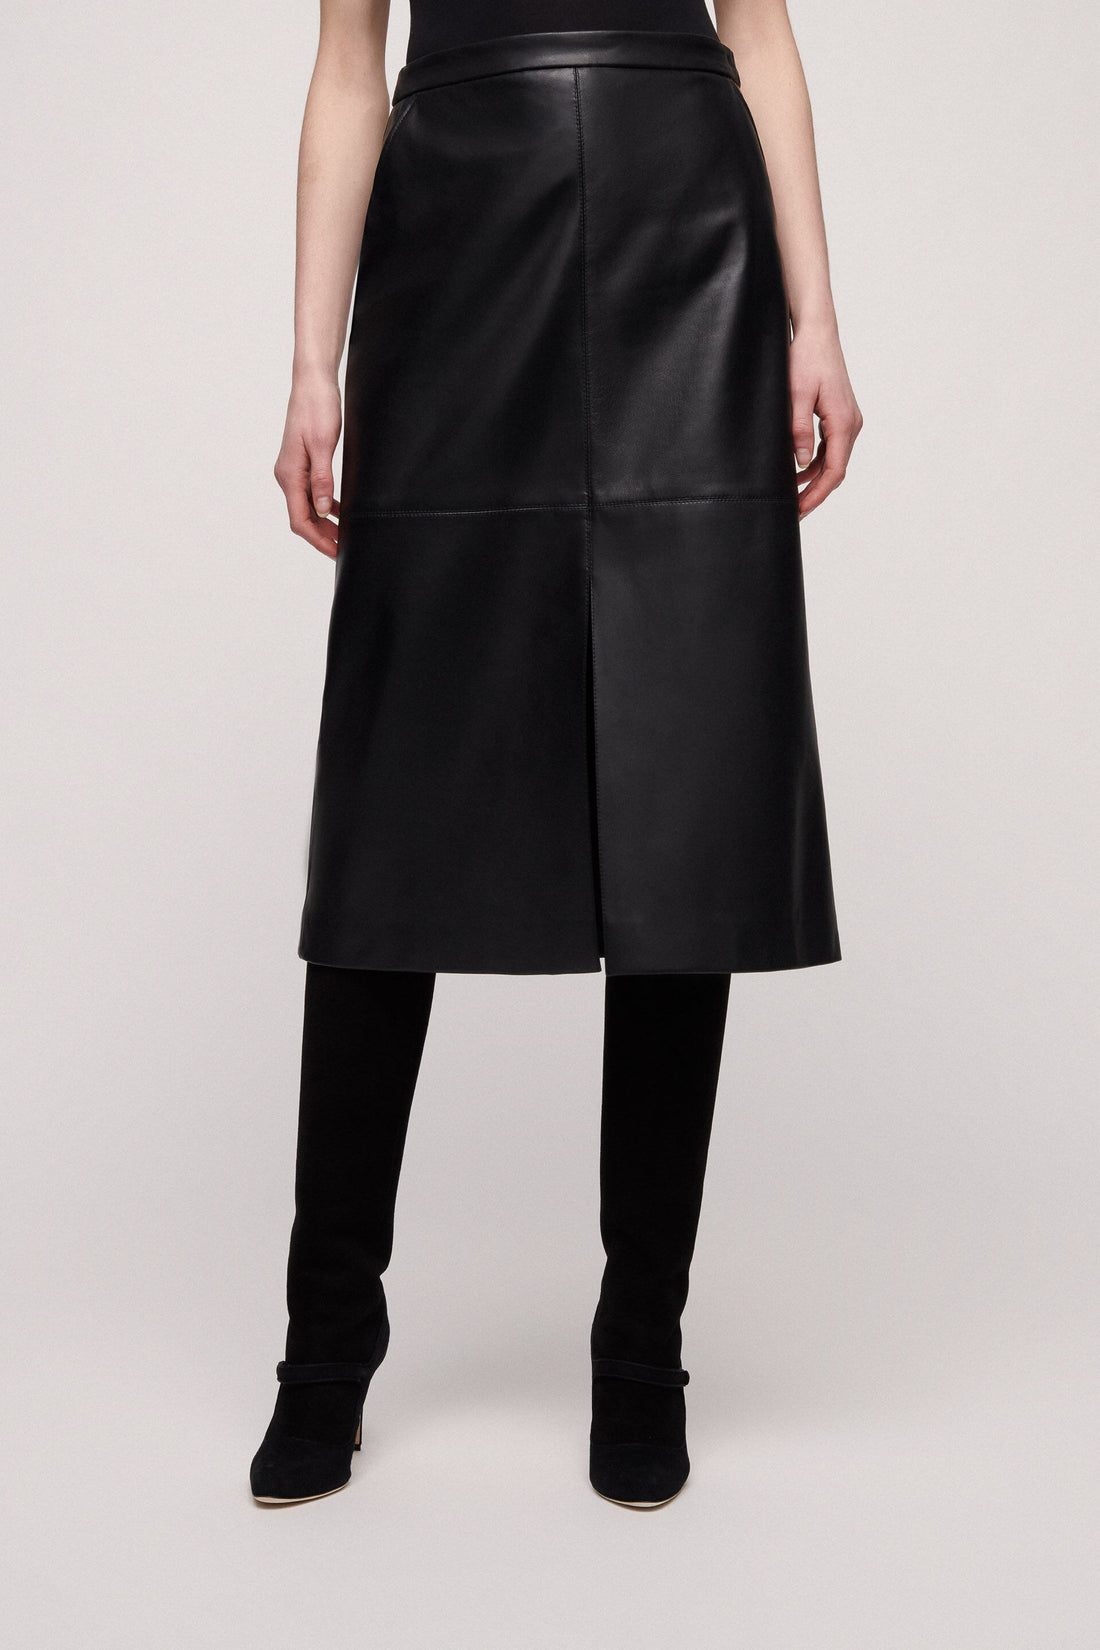 Federale Leather Skirt_FEDERALE_0101_01